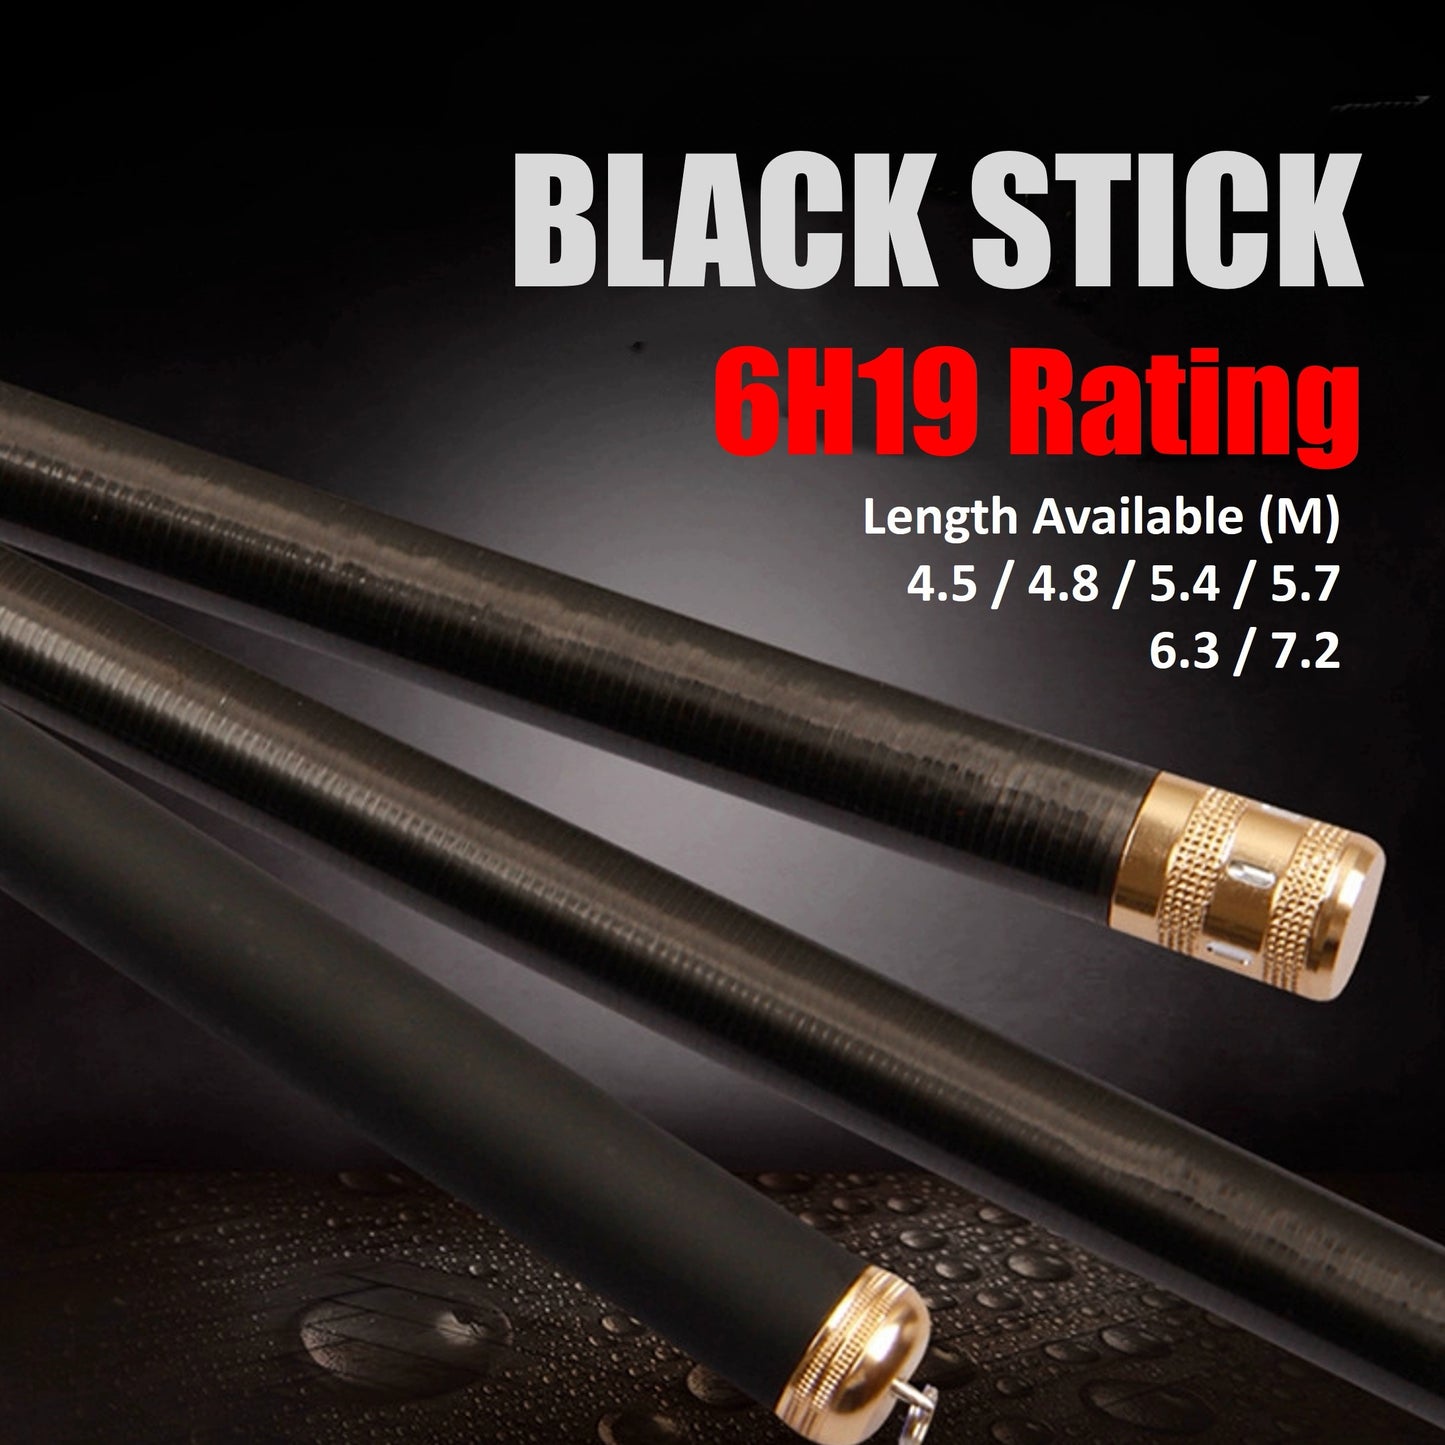 Black Stick Pole Rod 6H19 Rating PR012